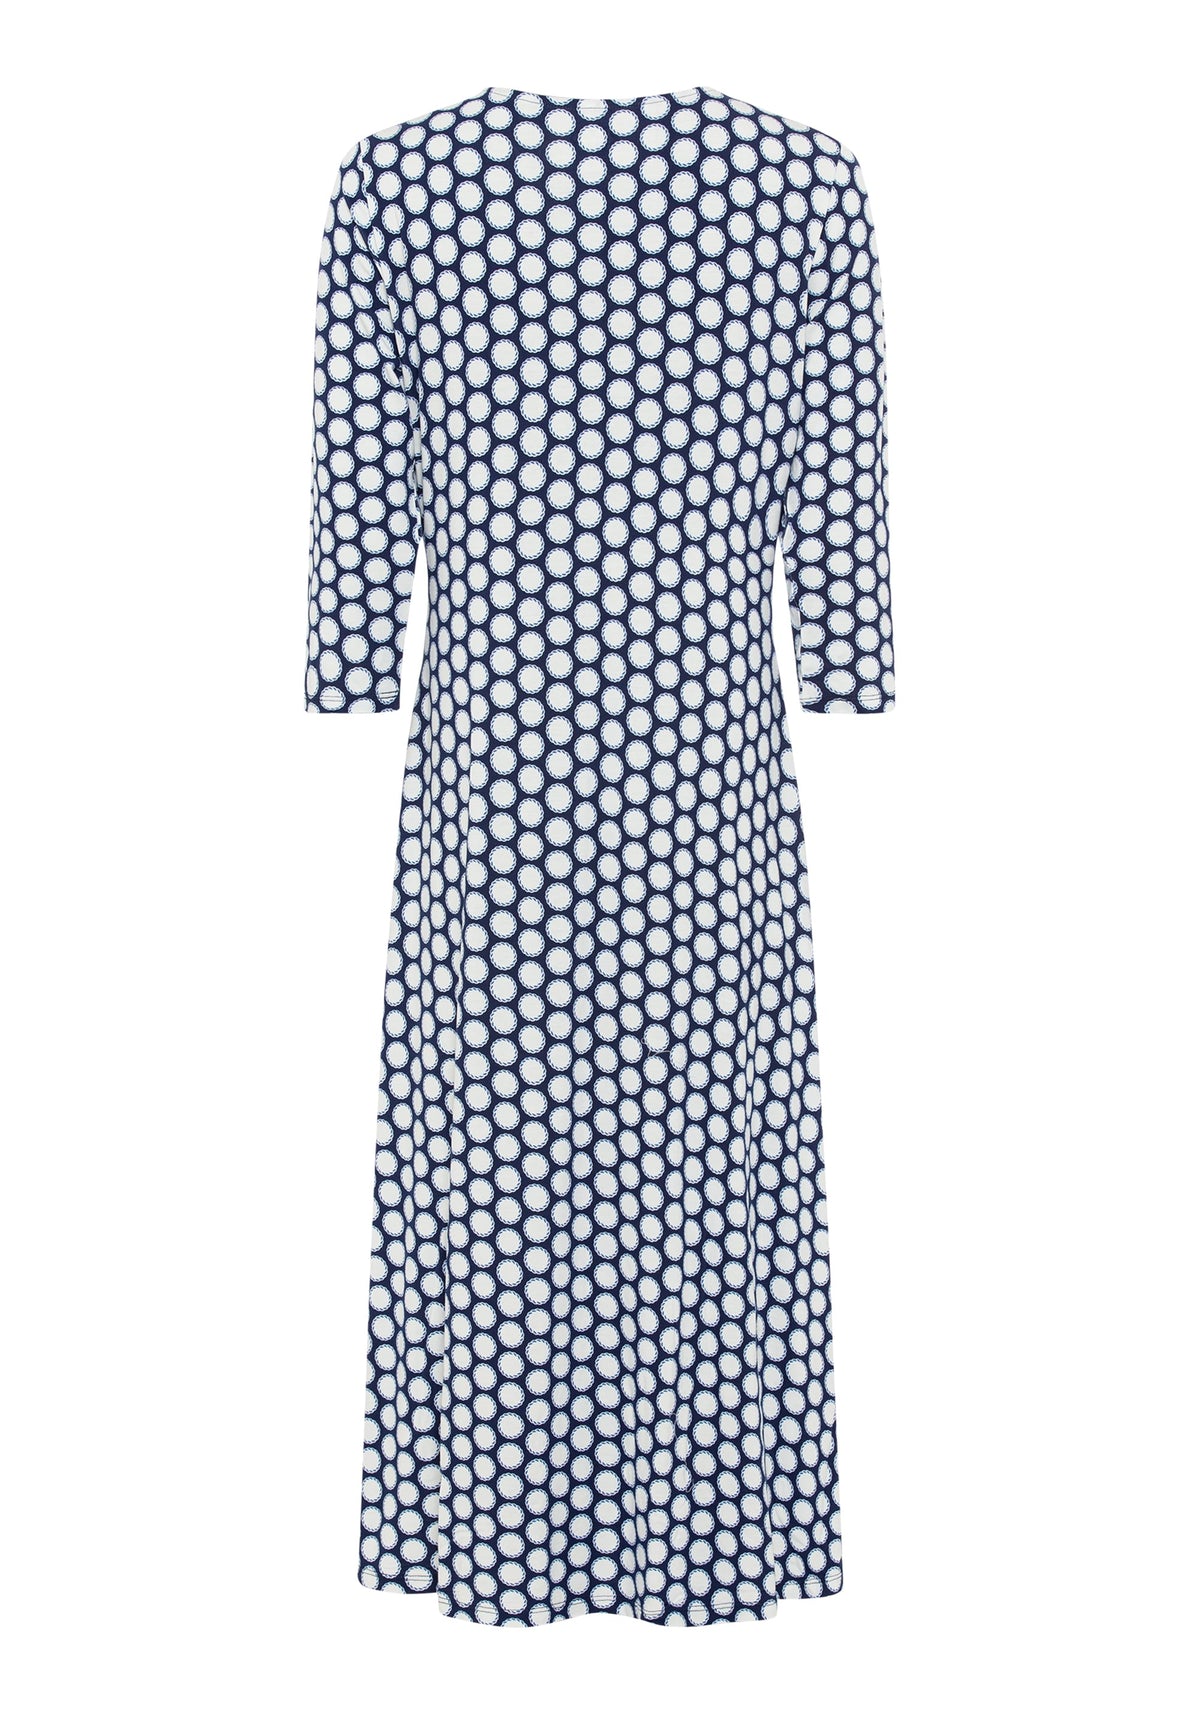 3/4 Sleeve A-Line Dot Print Midi Dress containing TENCEL™ Modal